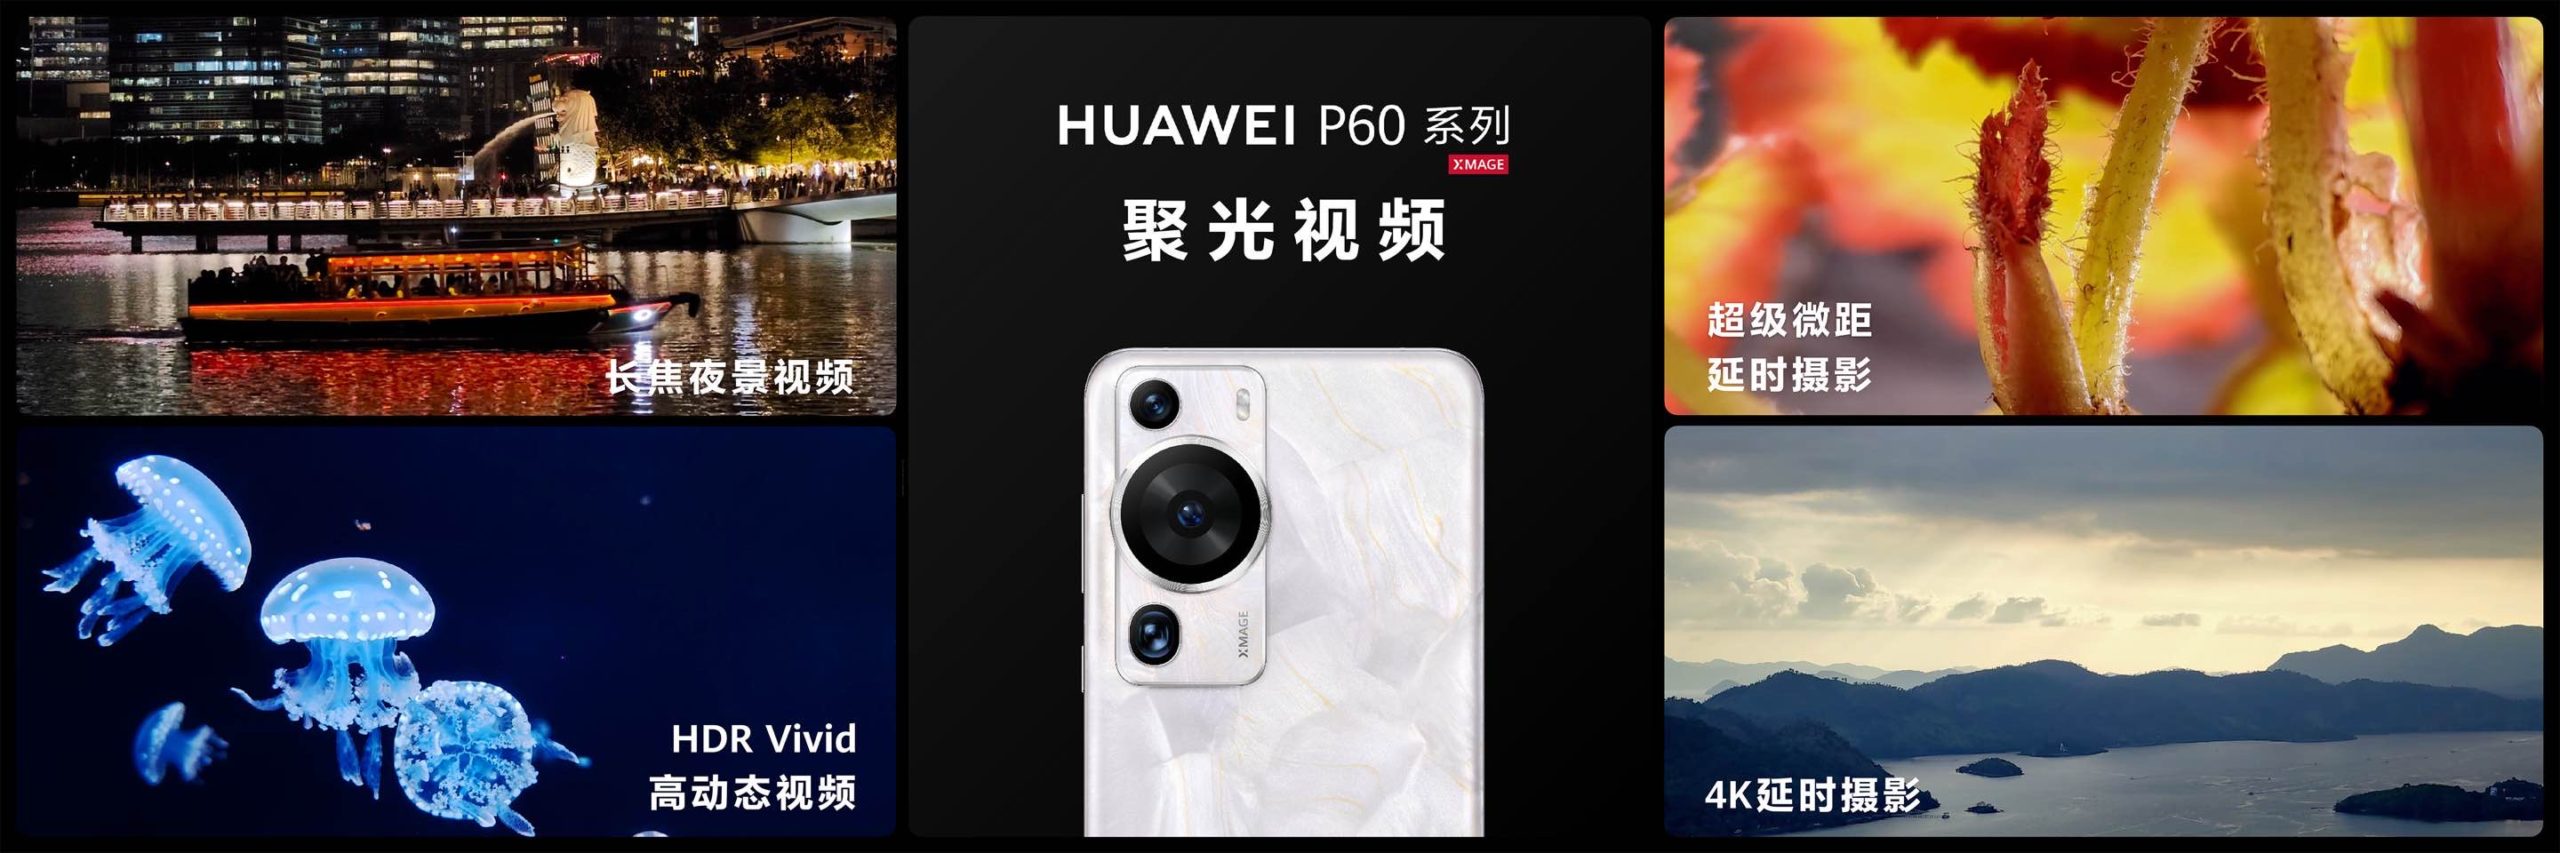 HUAWEI P60 Series kini rasmi dengan teknologi kamera XMAGE lebih hebat 20